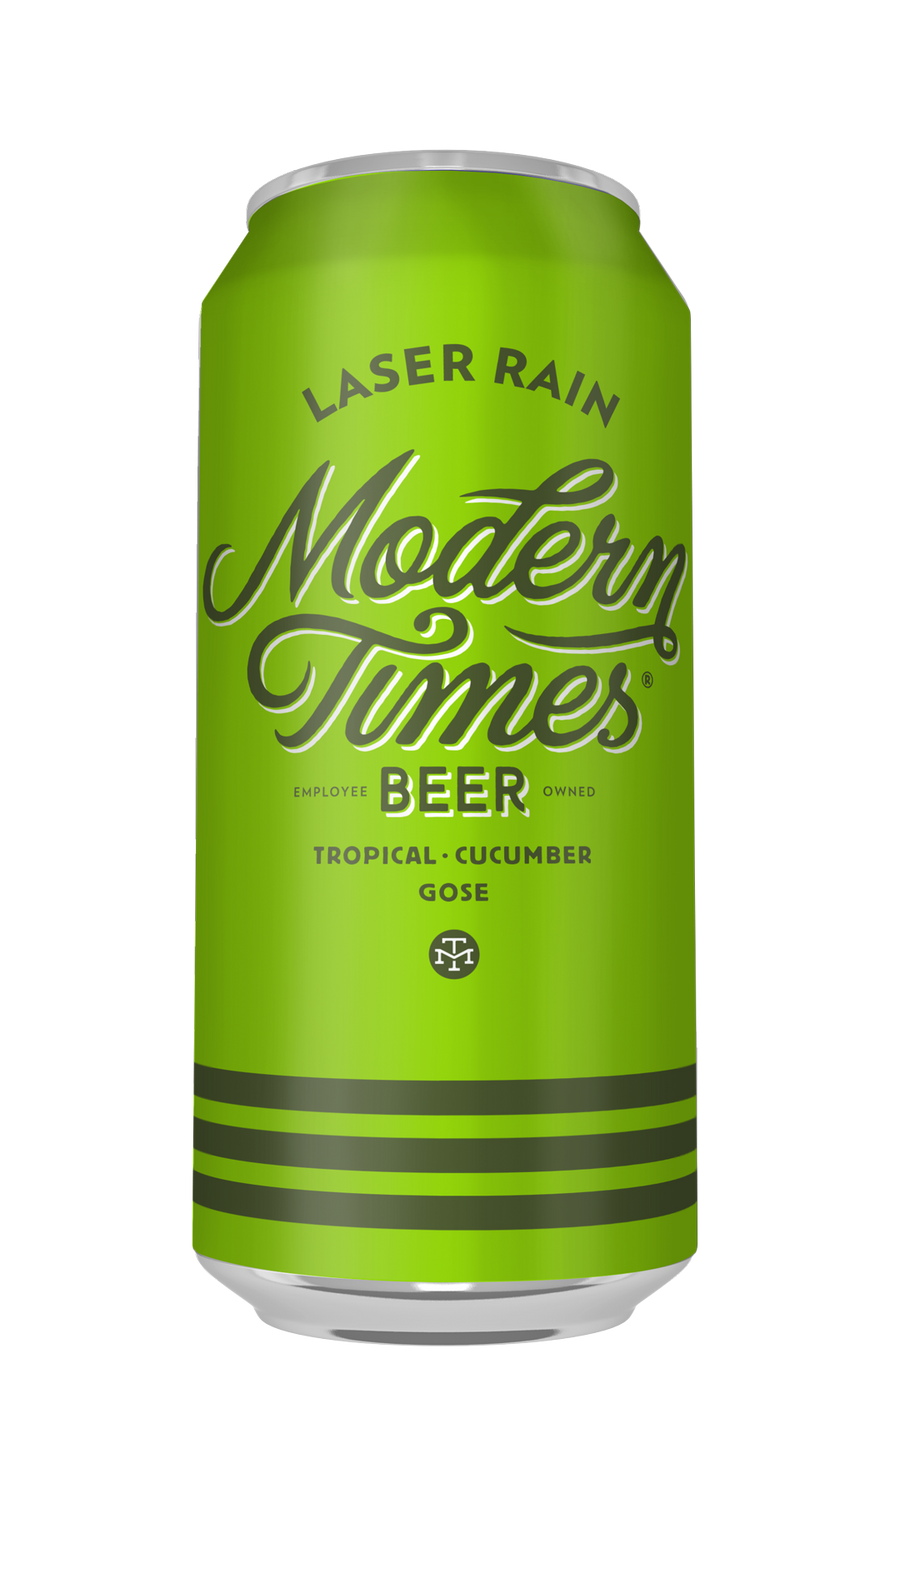 Buy Modern Times Laser Rain Gose Online -Craft City